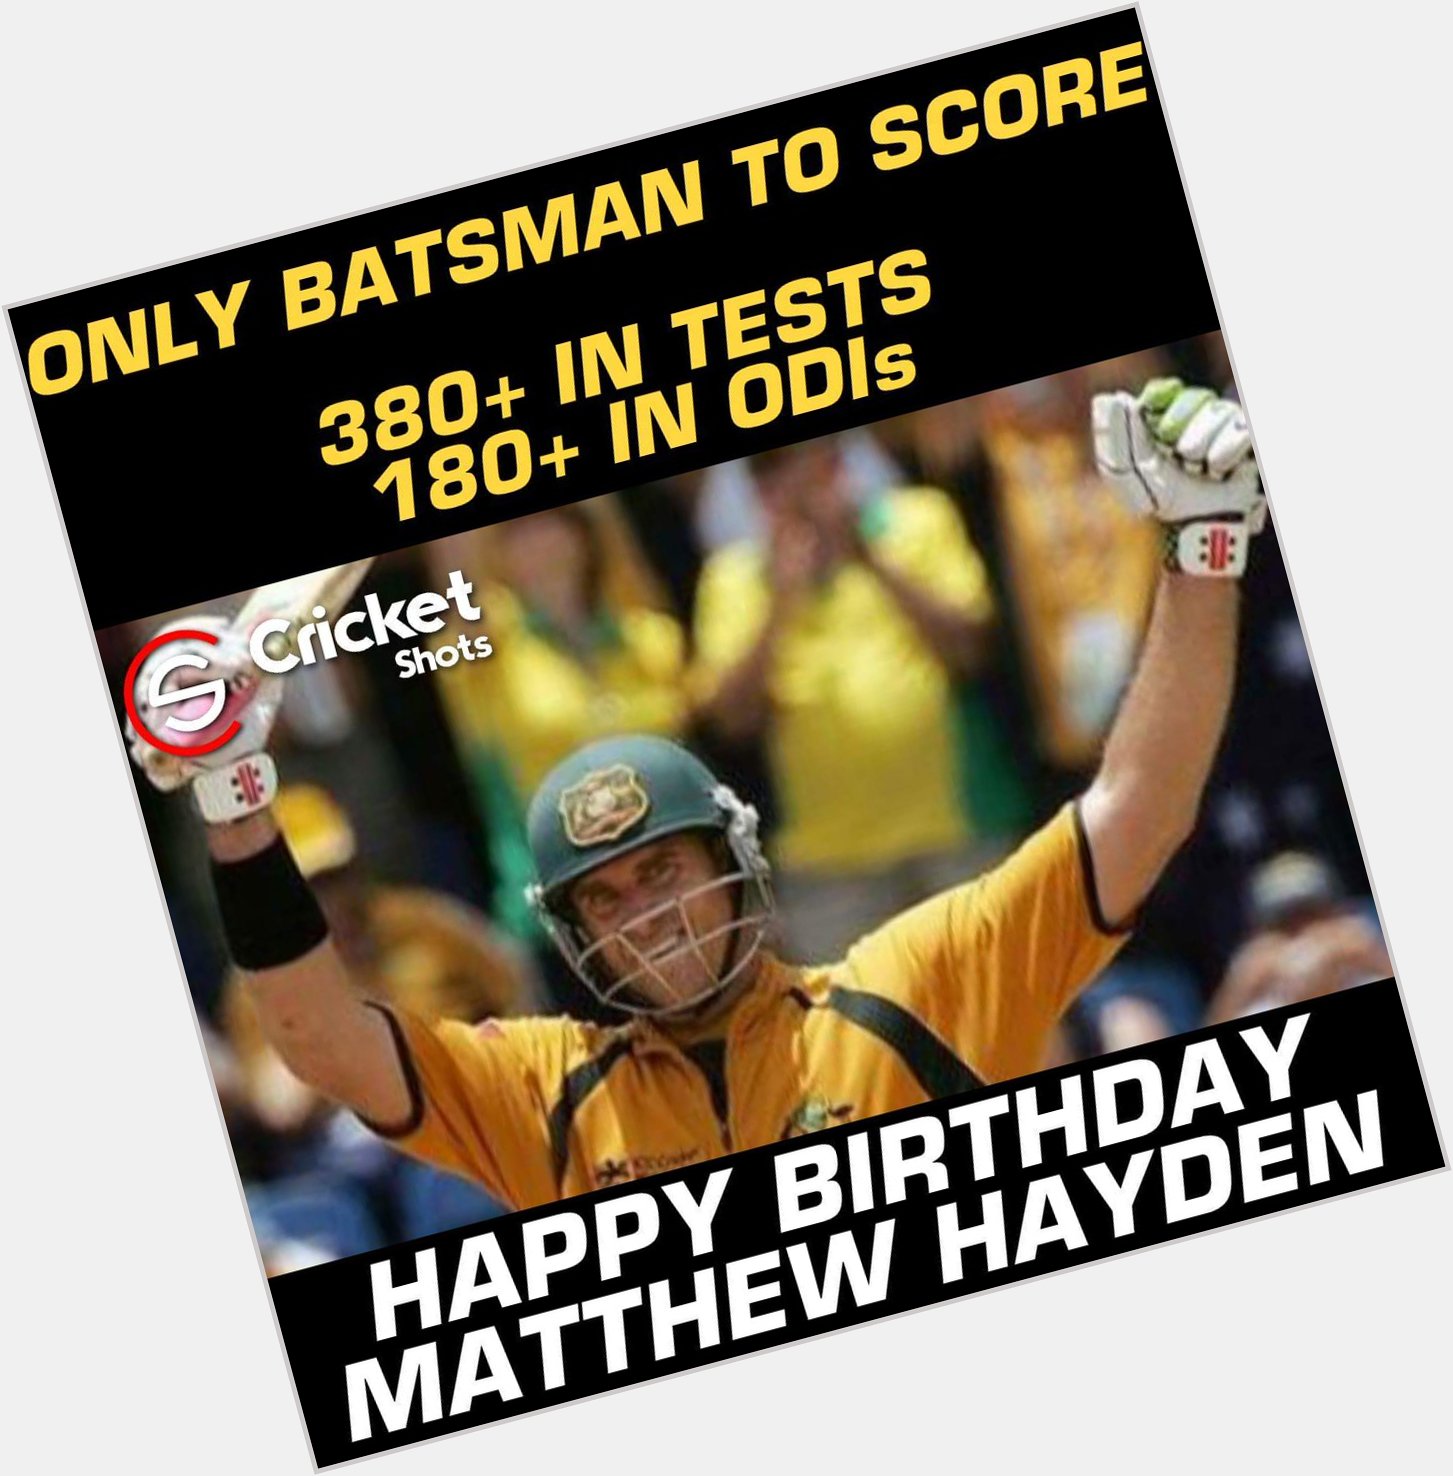 Happy Birthday, Matthew Hayden!! 